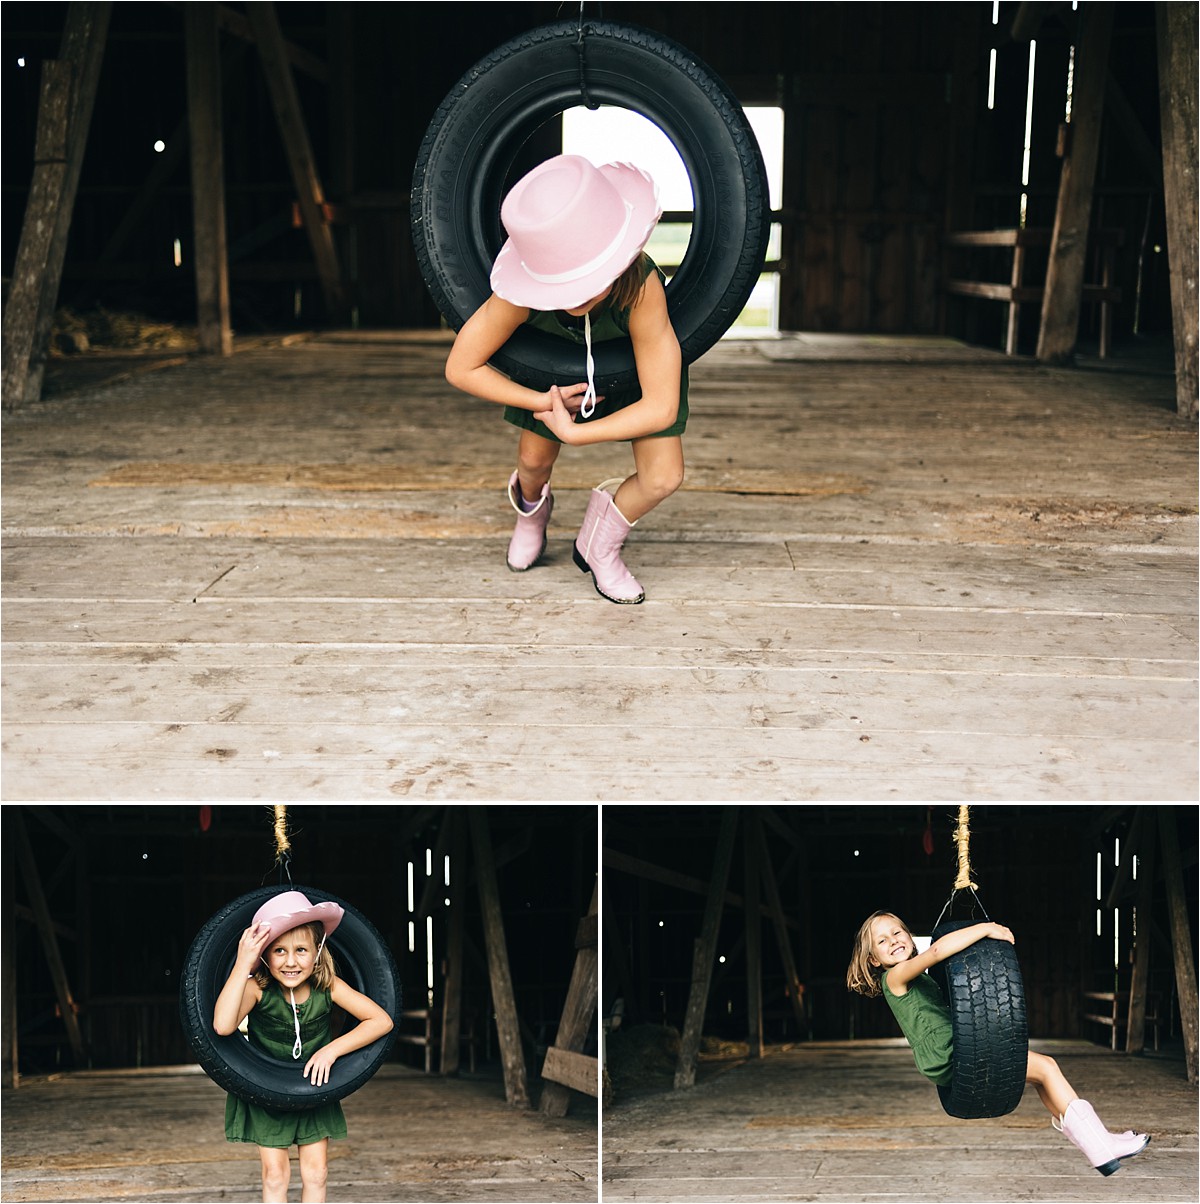 Little girl with pink cowboy hat swings on tire swing.